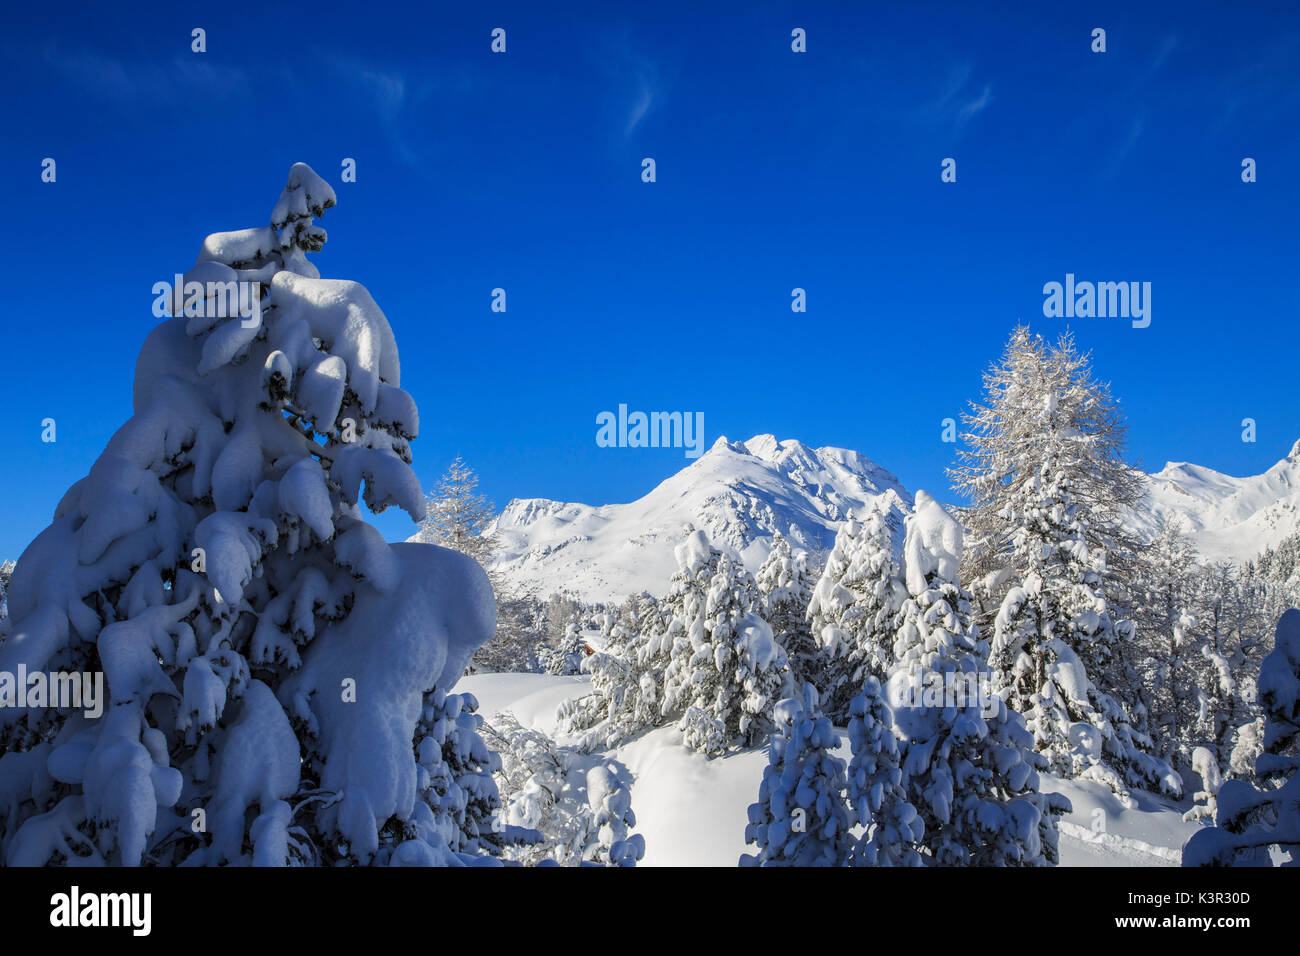 The heavy snowfall covered trees and the peaks  around Maloja Canton of Graubünden Engadine Switzerland Europe Stock Photo